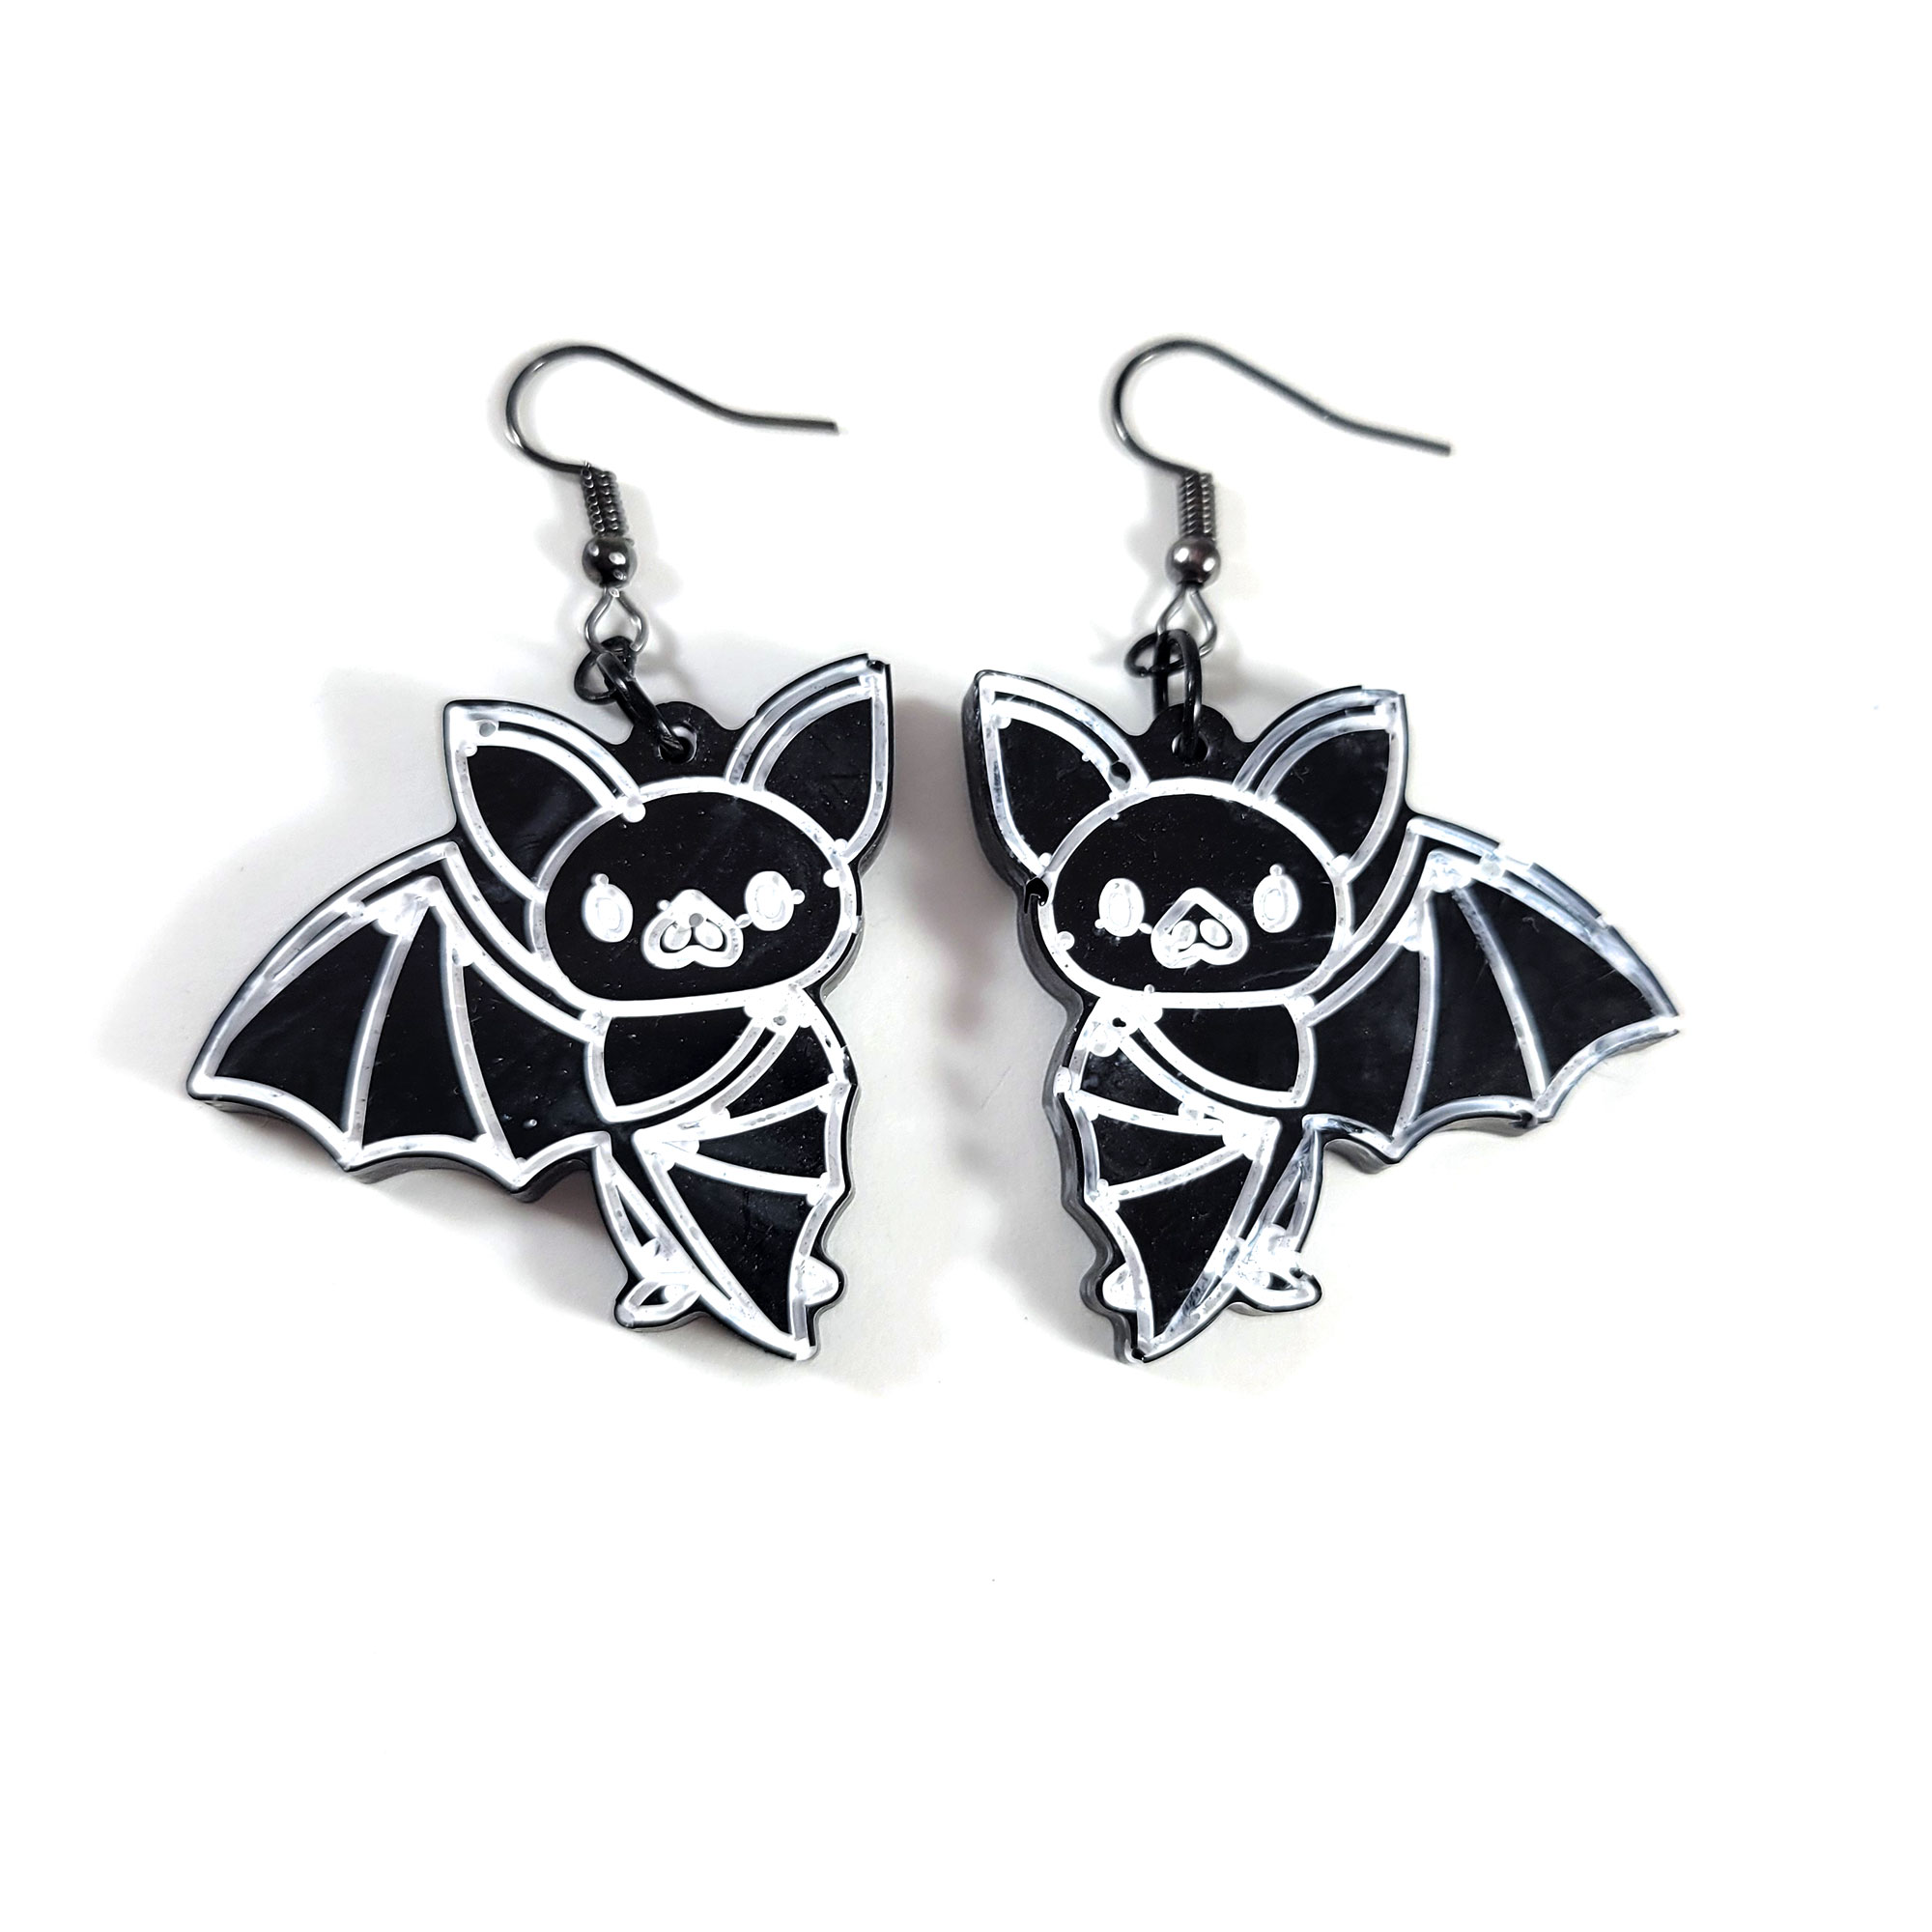 Black & White Flying Baby Bat Earrings by Wilde Designs